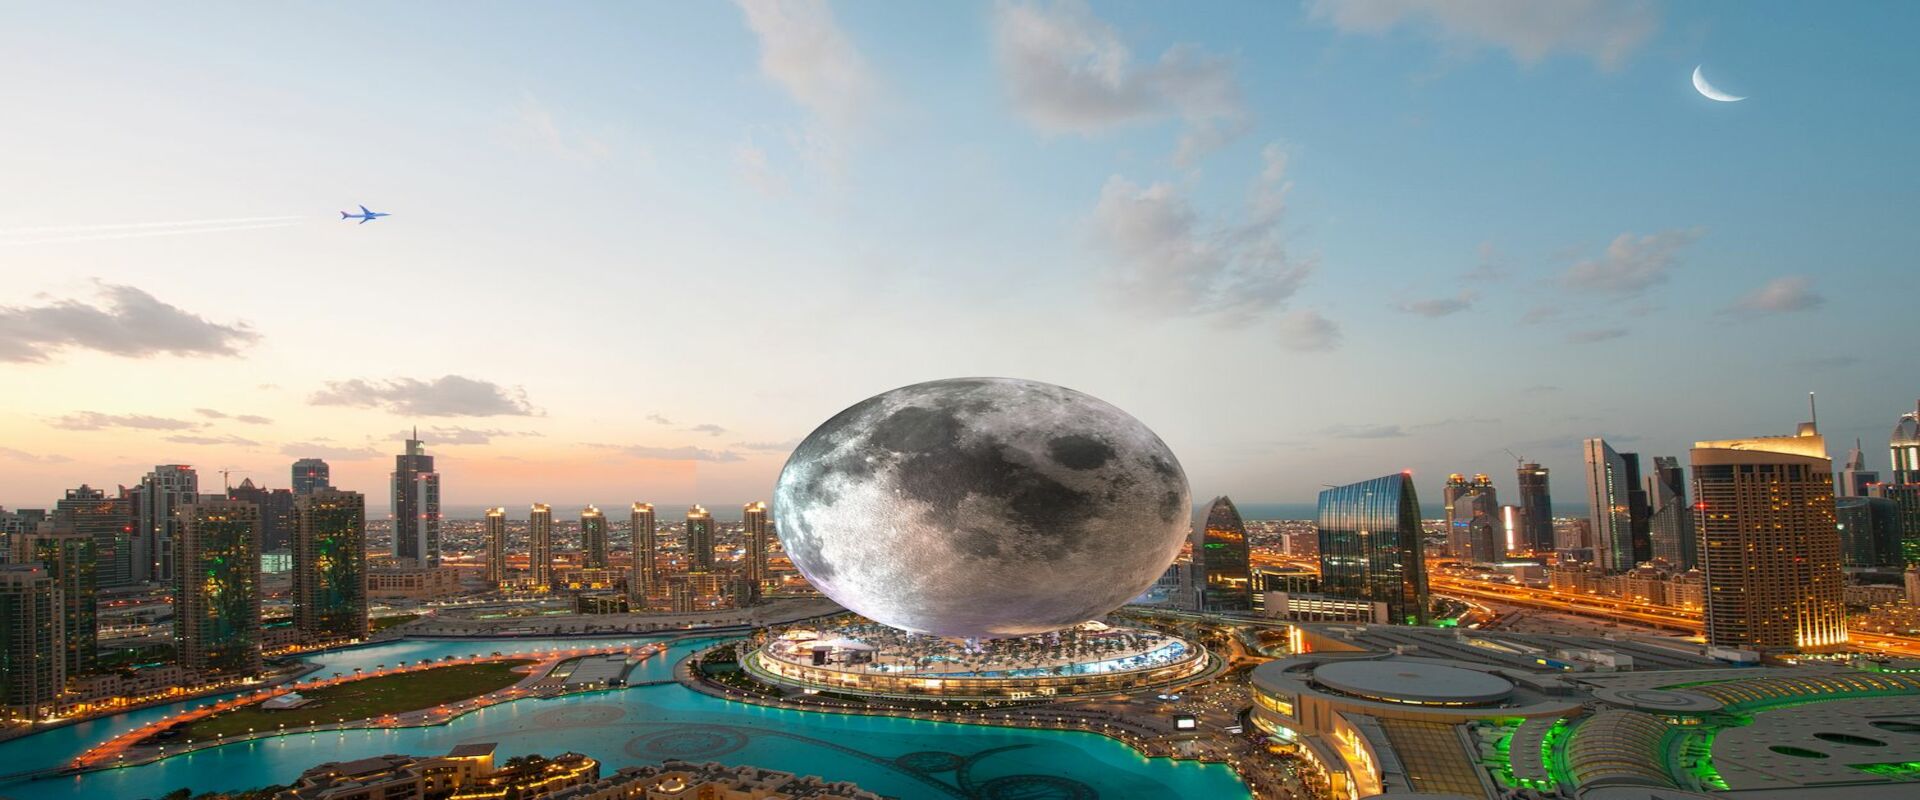 Dubai Moon  - Moon World Resorts Dubai.